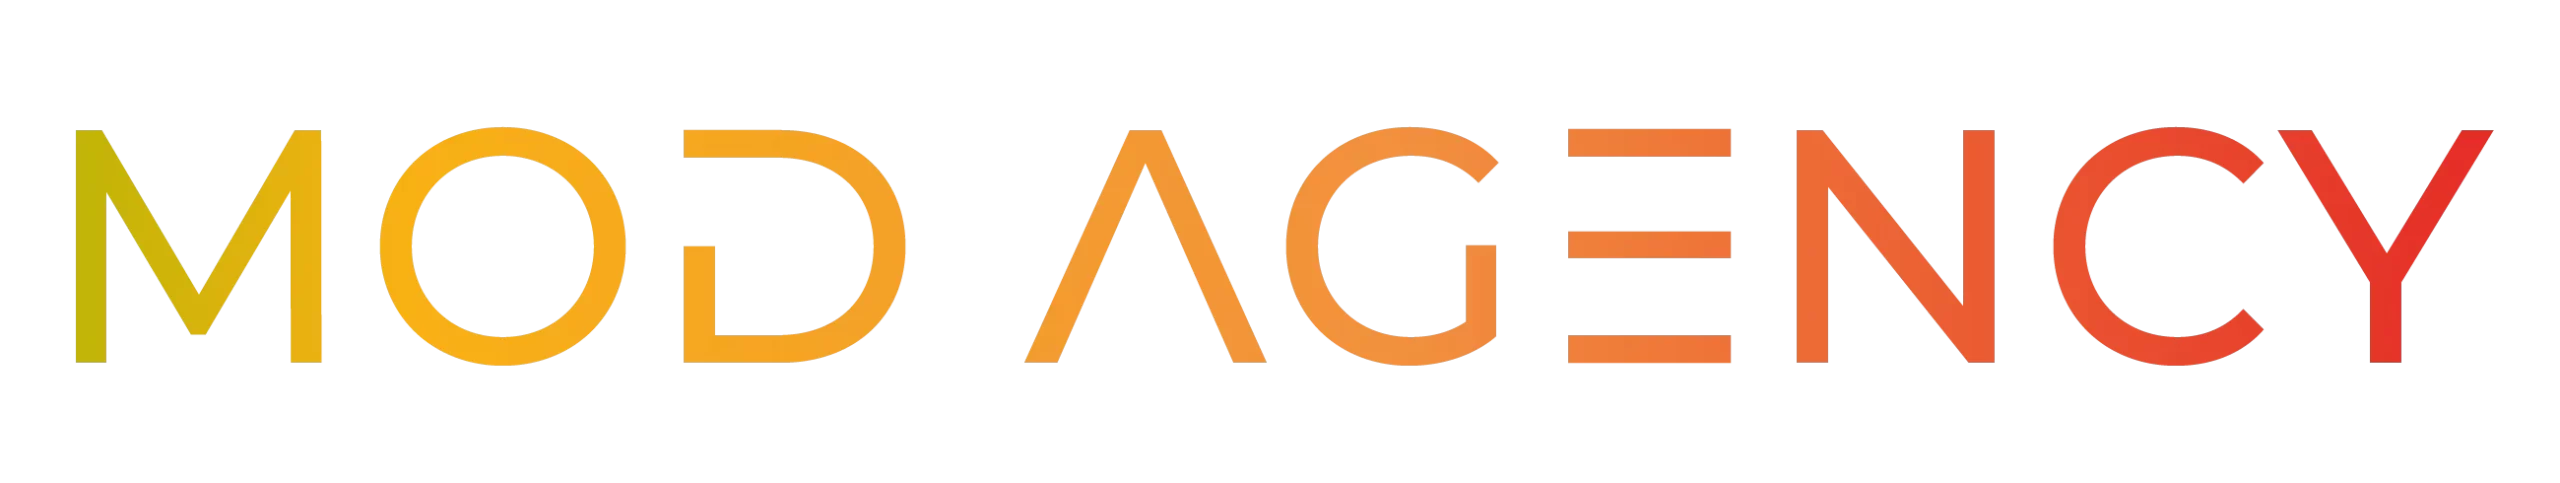 Mod agency logo